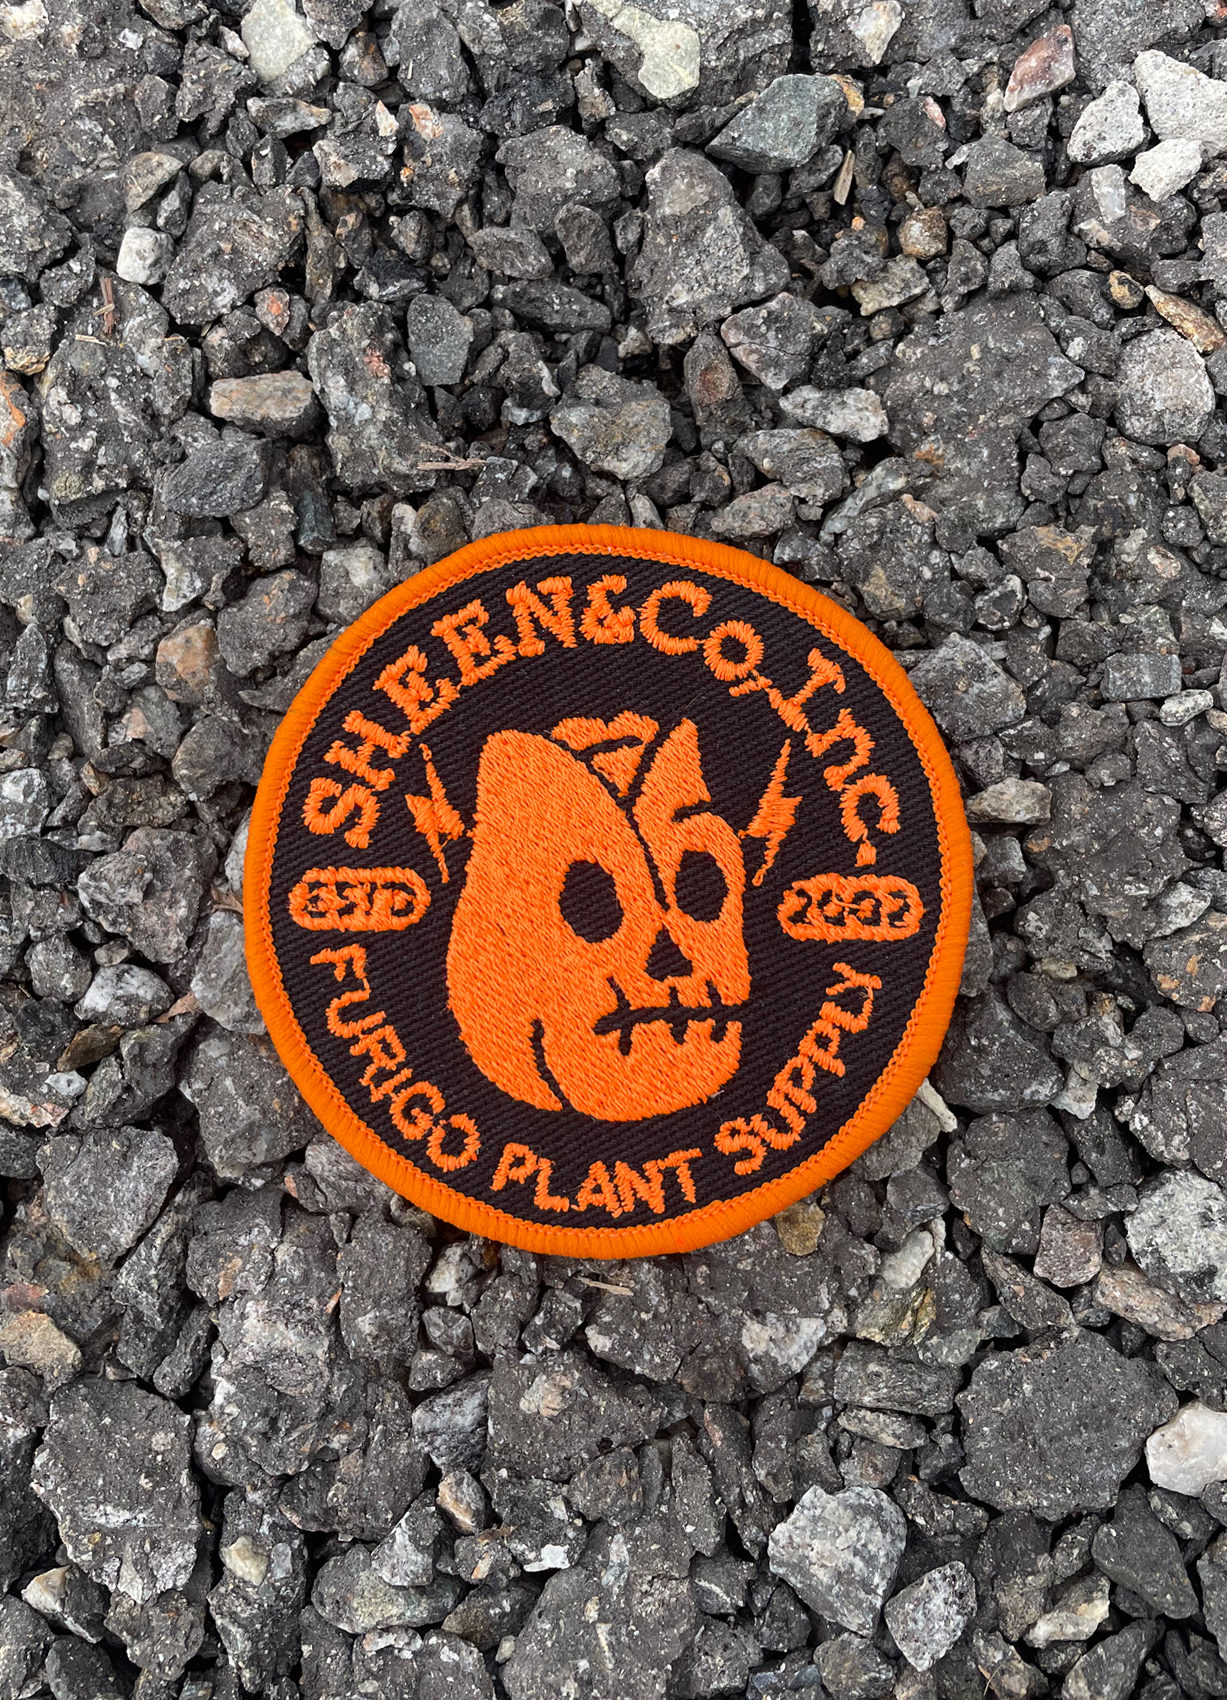 Furigo Plant Supply Embroidery Patch [Black/Orange]